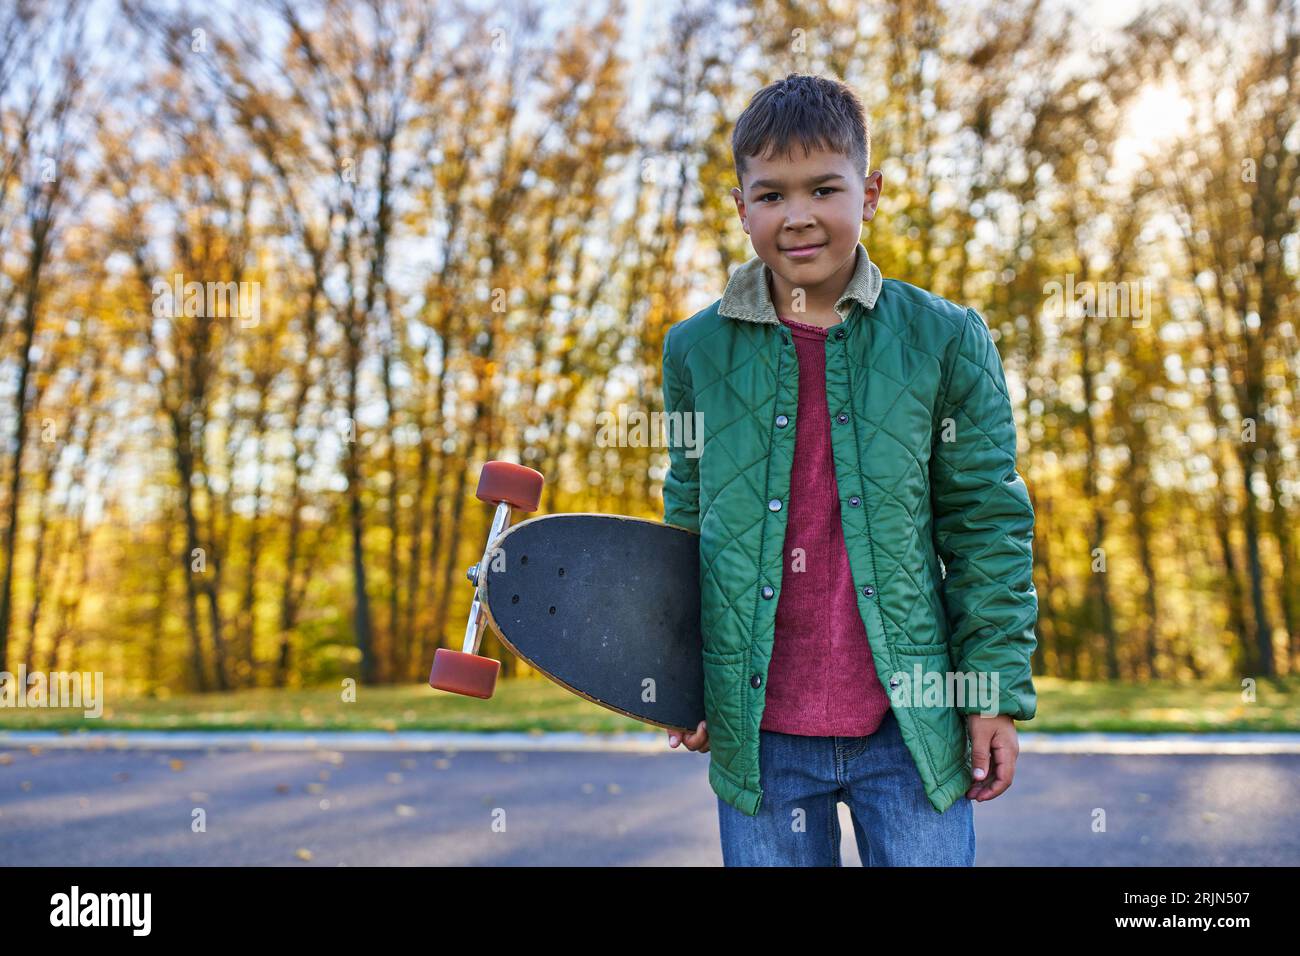 happy african american boy in outerwear holding penny board, autumn park, fall season, portrait Stock Photo